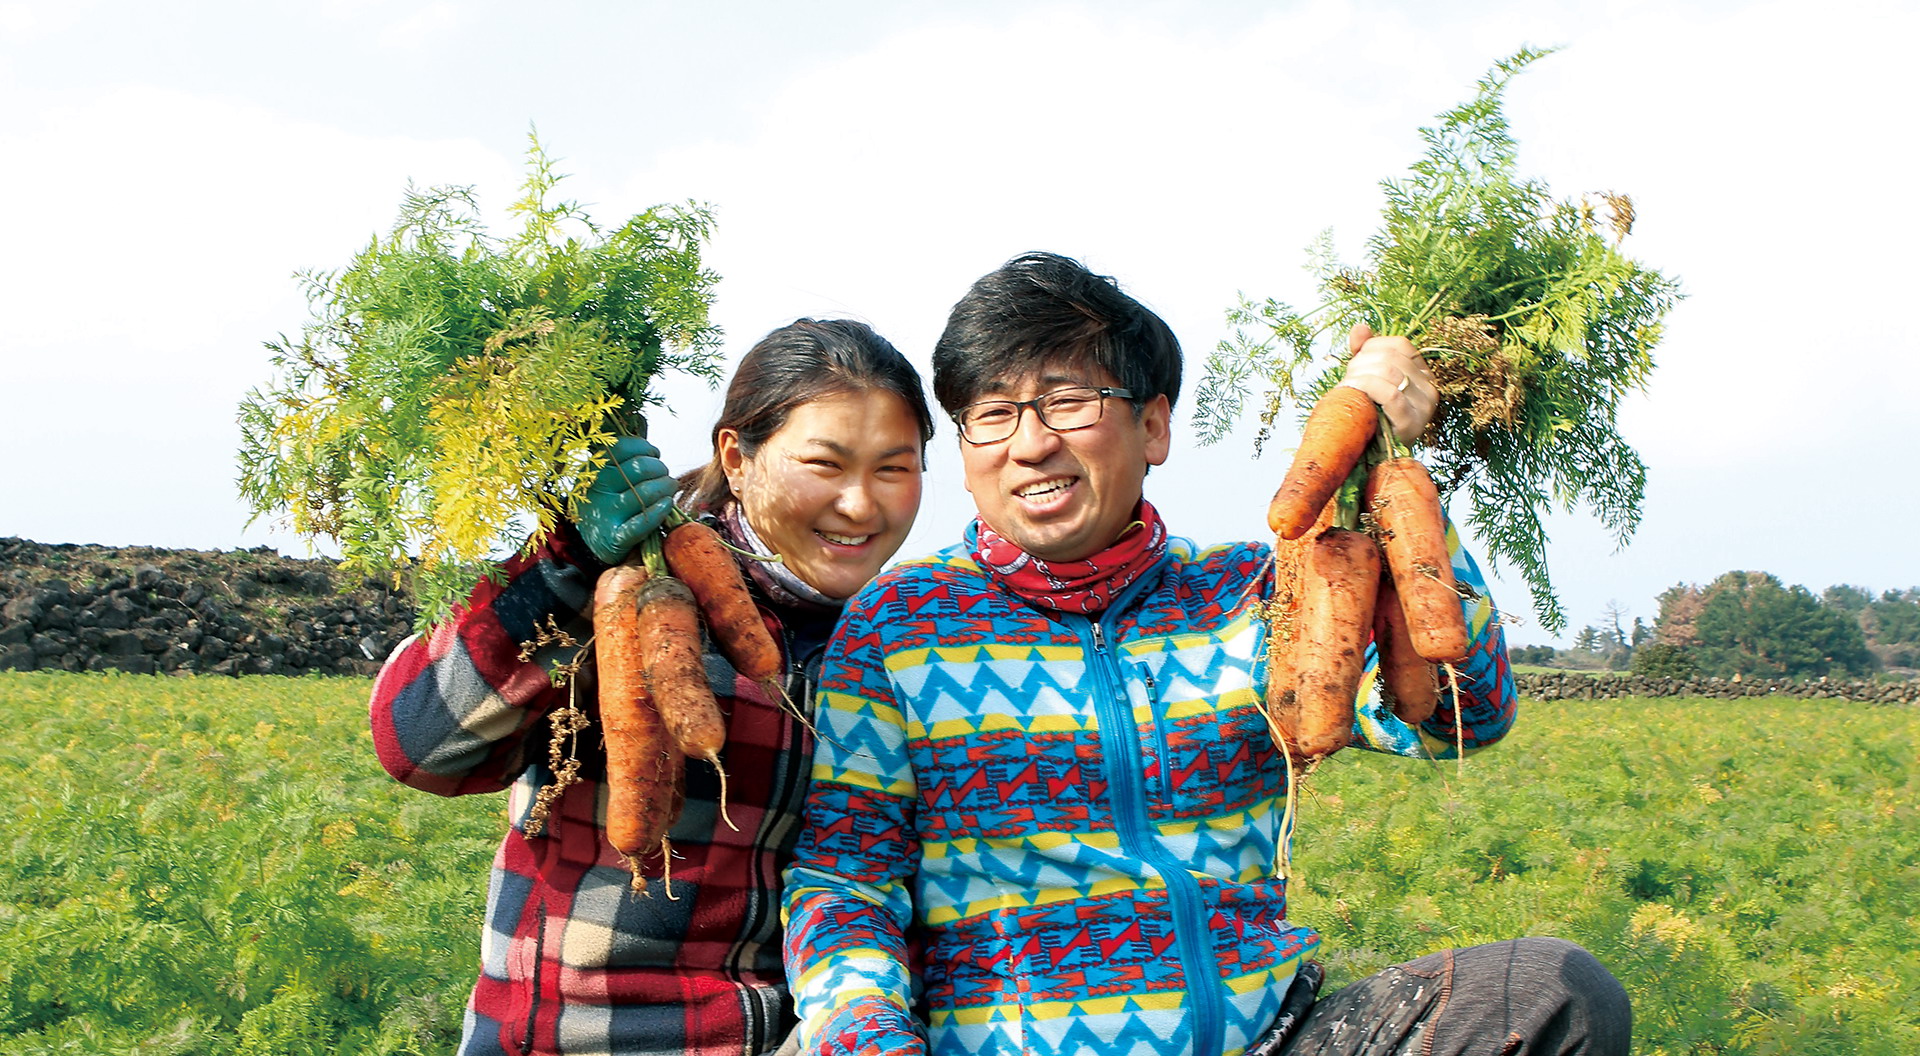 Hansalim: The Origin of Korea’s Eco-friendly Local Food Cooperative Movement